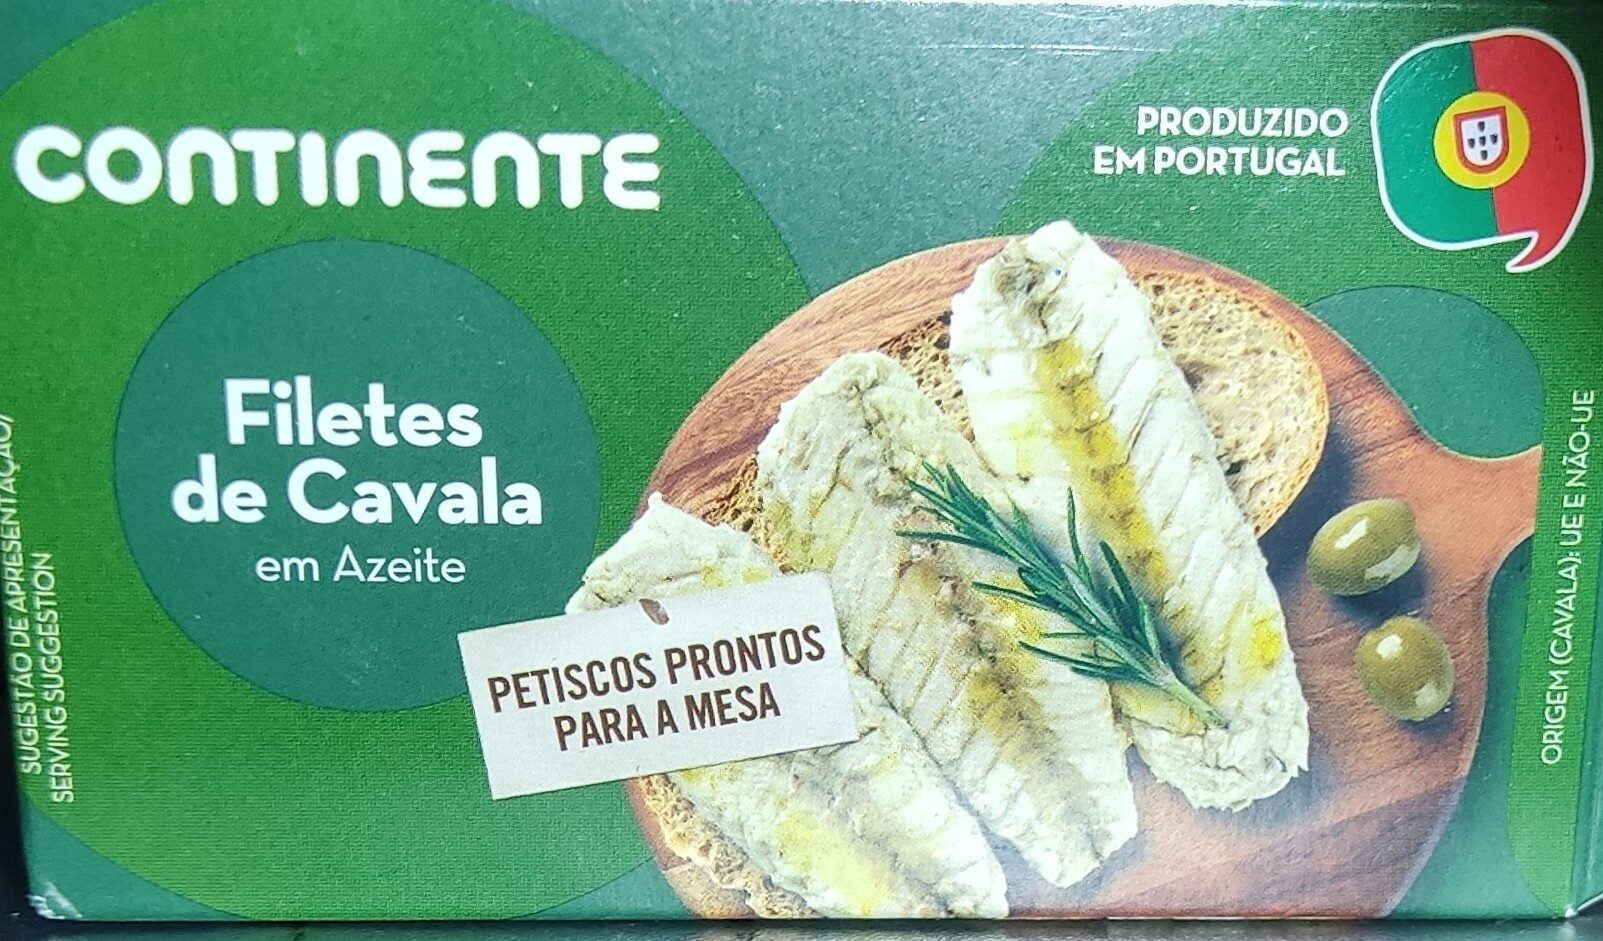 Filetes de Cavala em Azeite - Product - pt